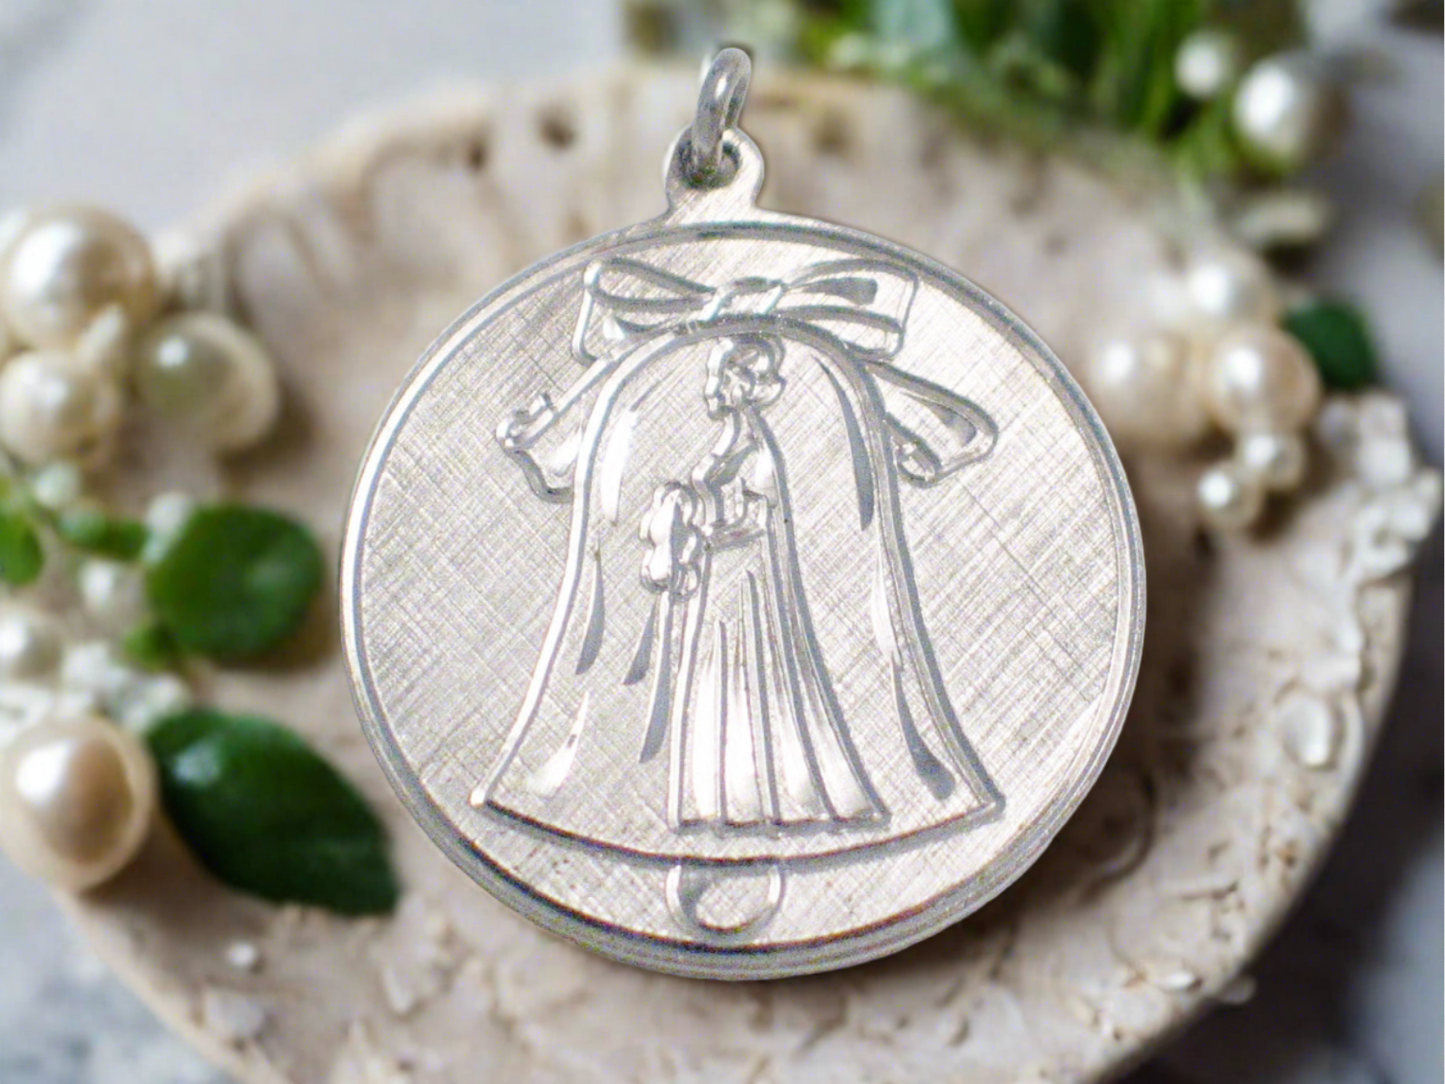 Wedding Jewelry, Women's Vintage Wedding Bell & Bride Sterling Silver Medallion Charm Pendant - Engraveable